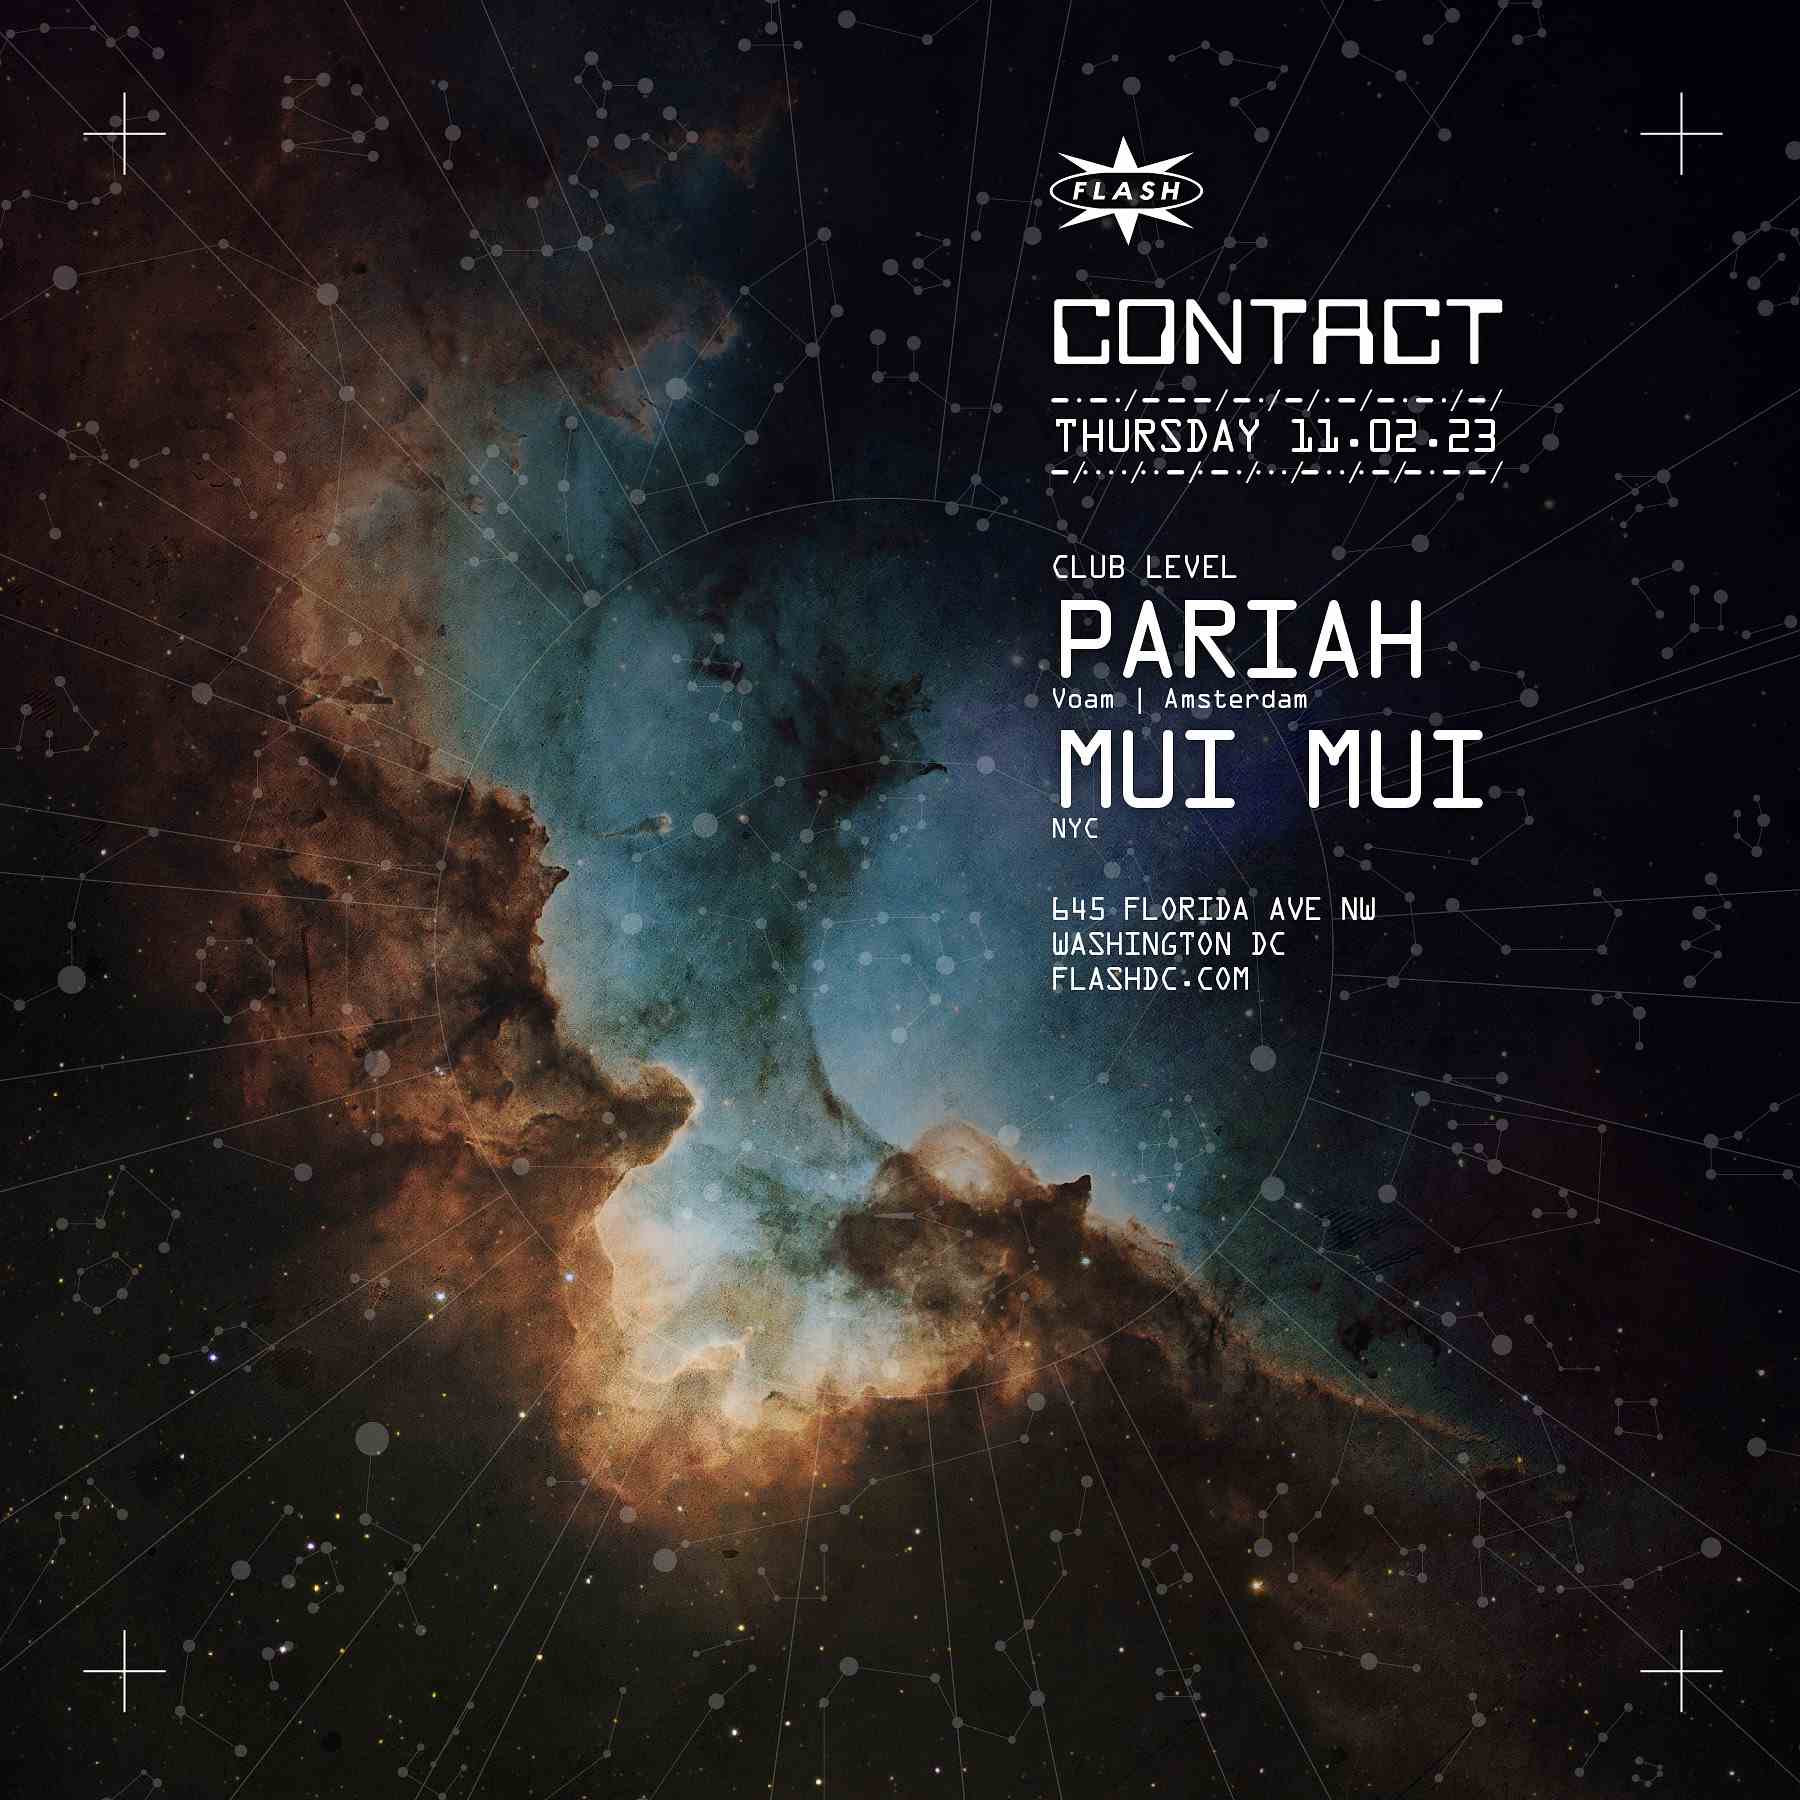 CONTACT: Pariah event flyer